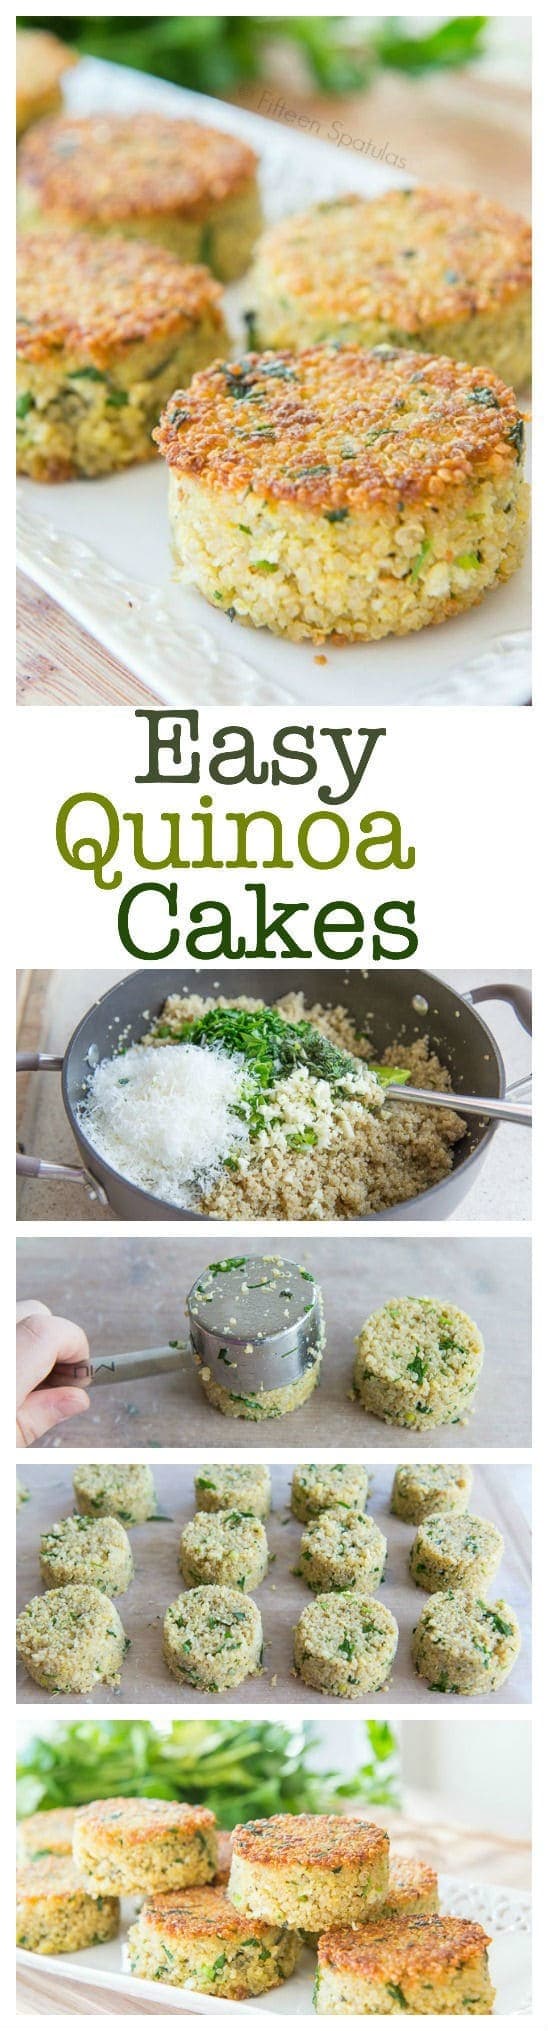 Photo Collage of Making Quinoa Cakes